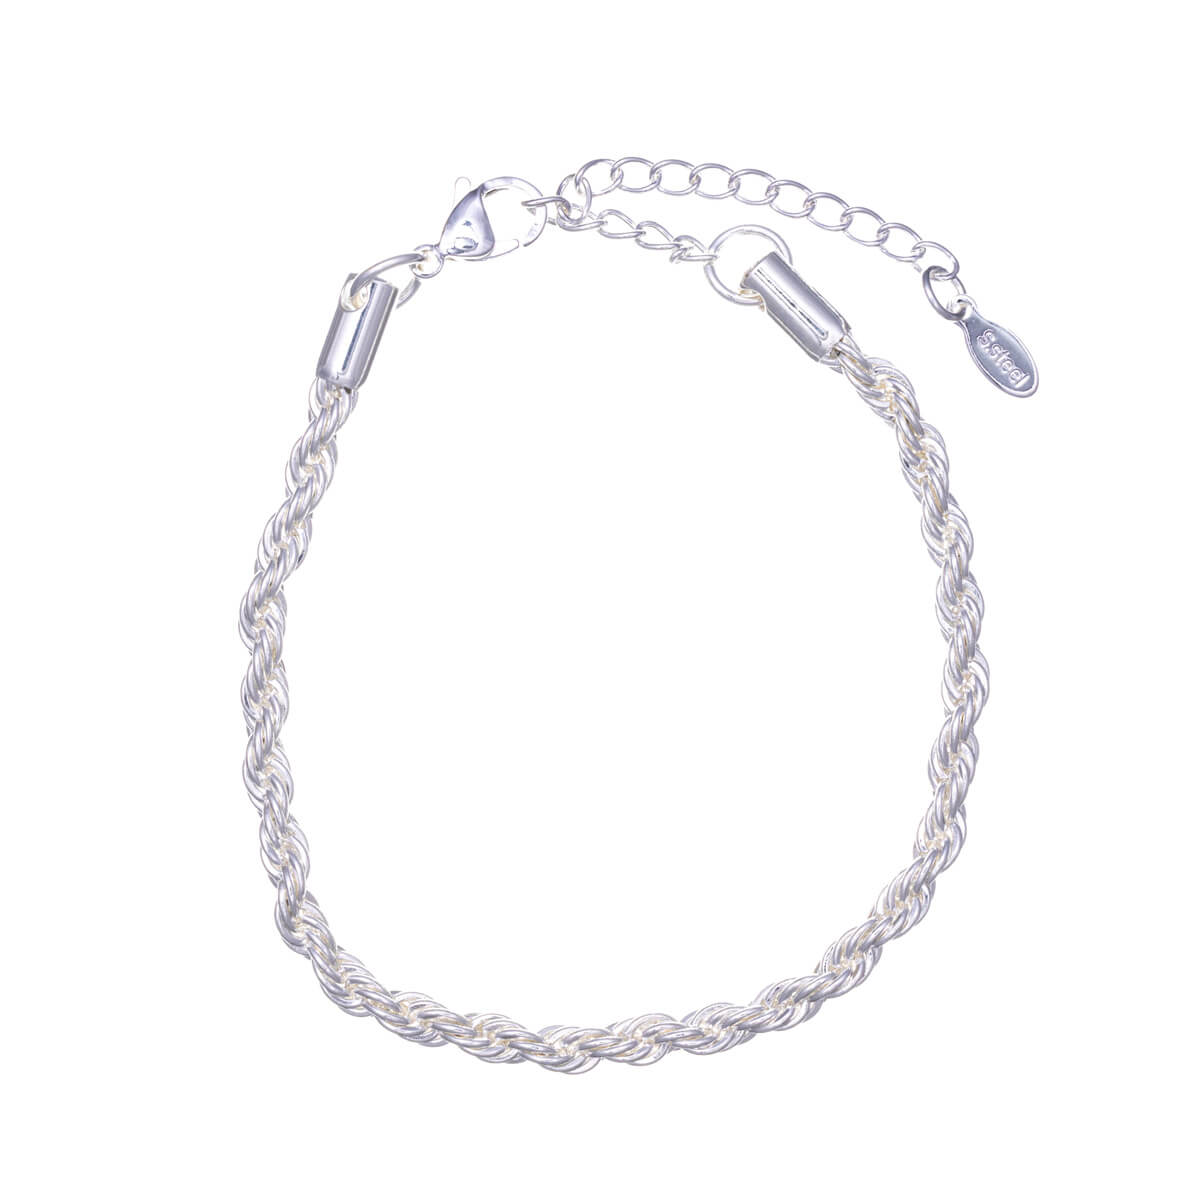 Rope chain bracelet cordell-chain 4mm 18cm +5cm (Steel 316L)